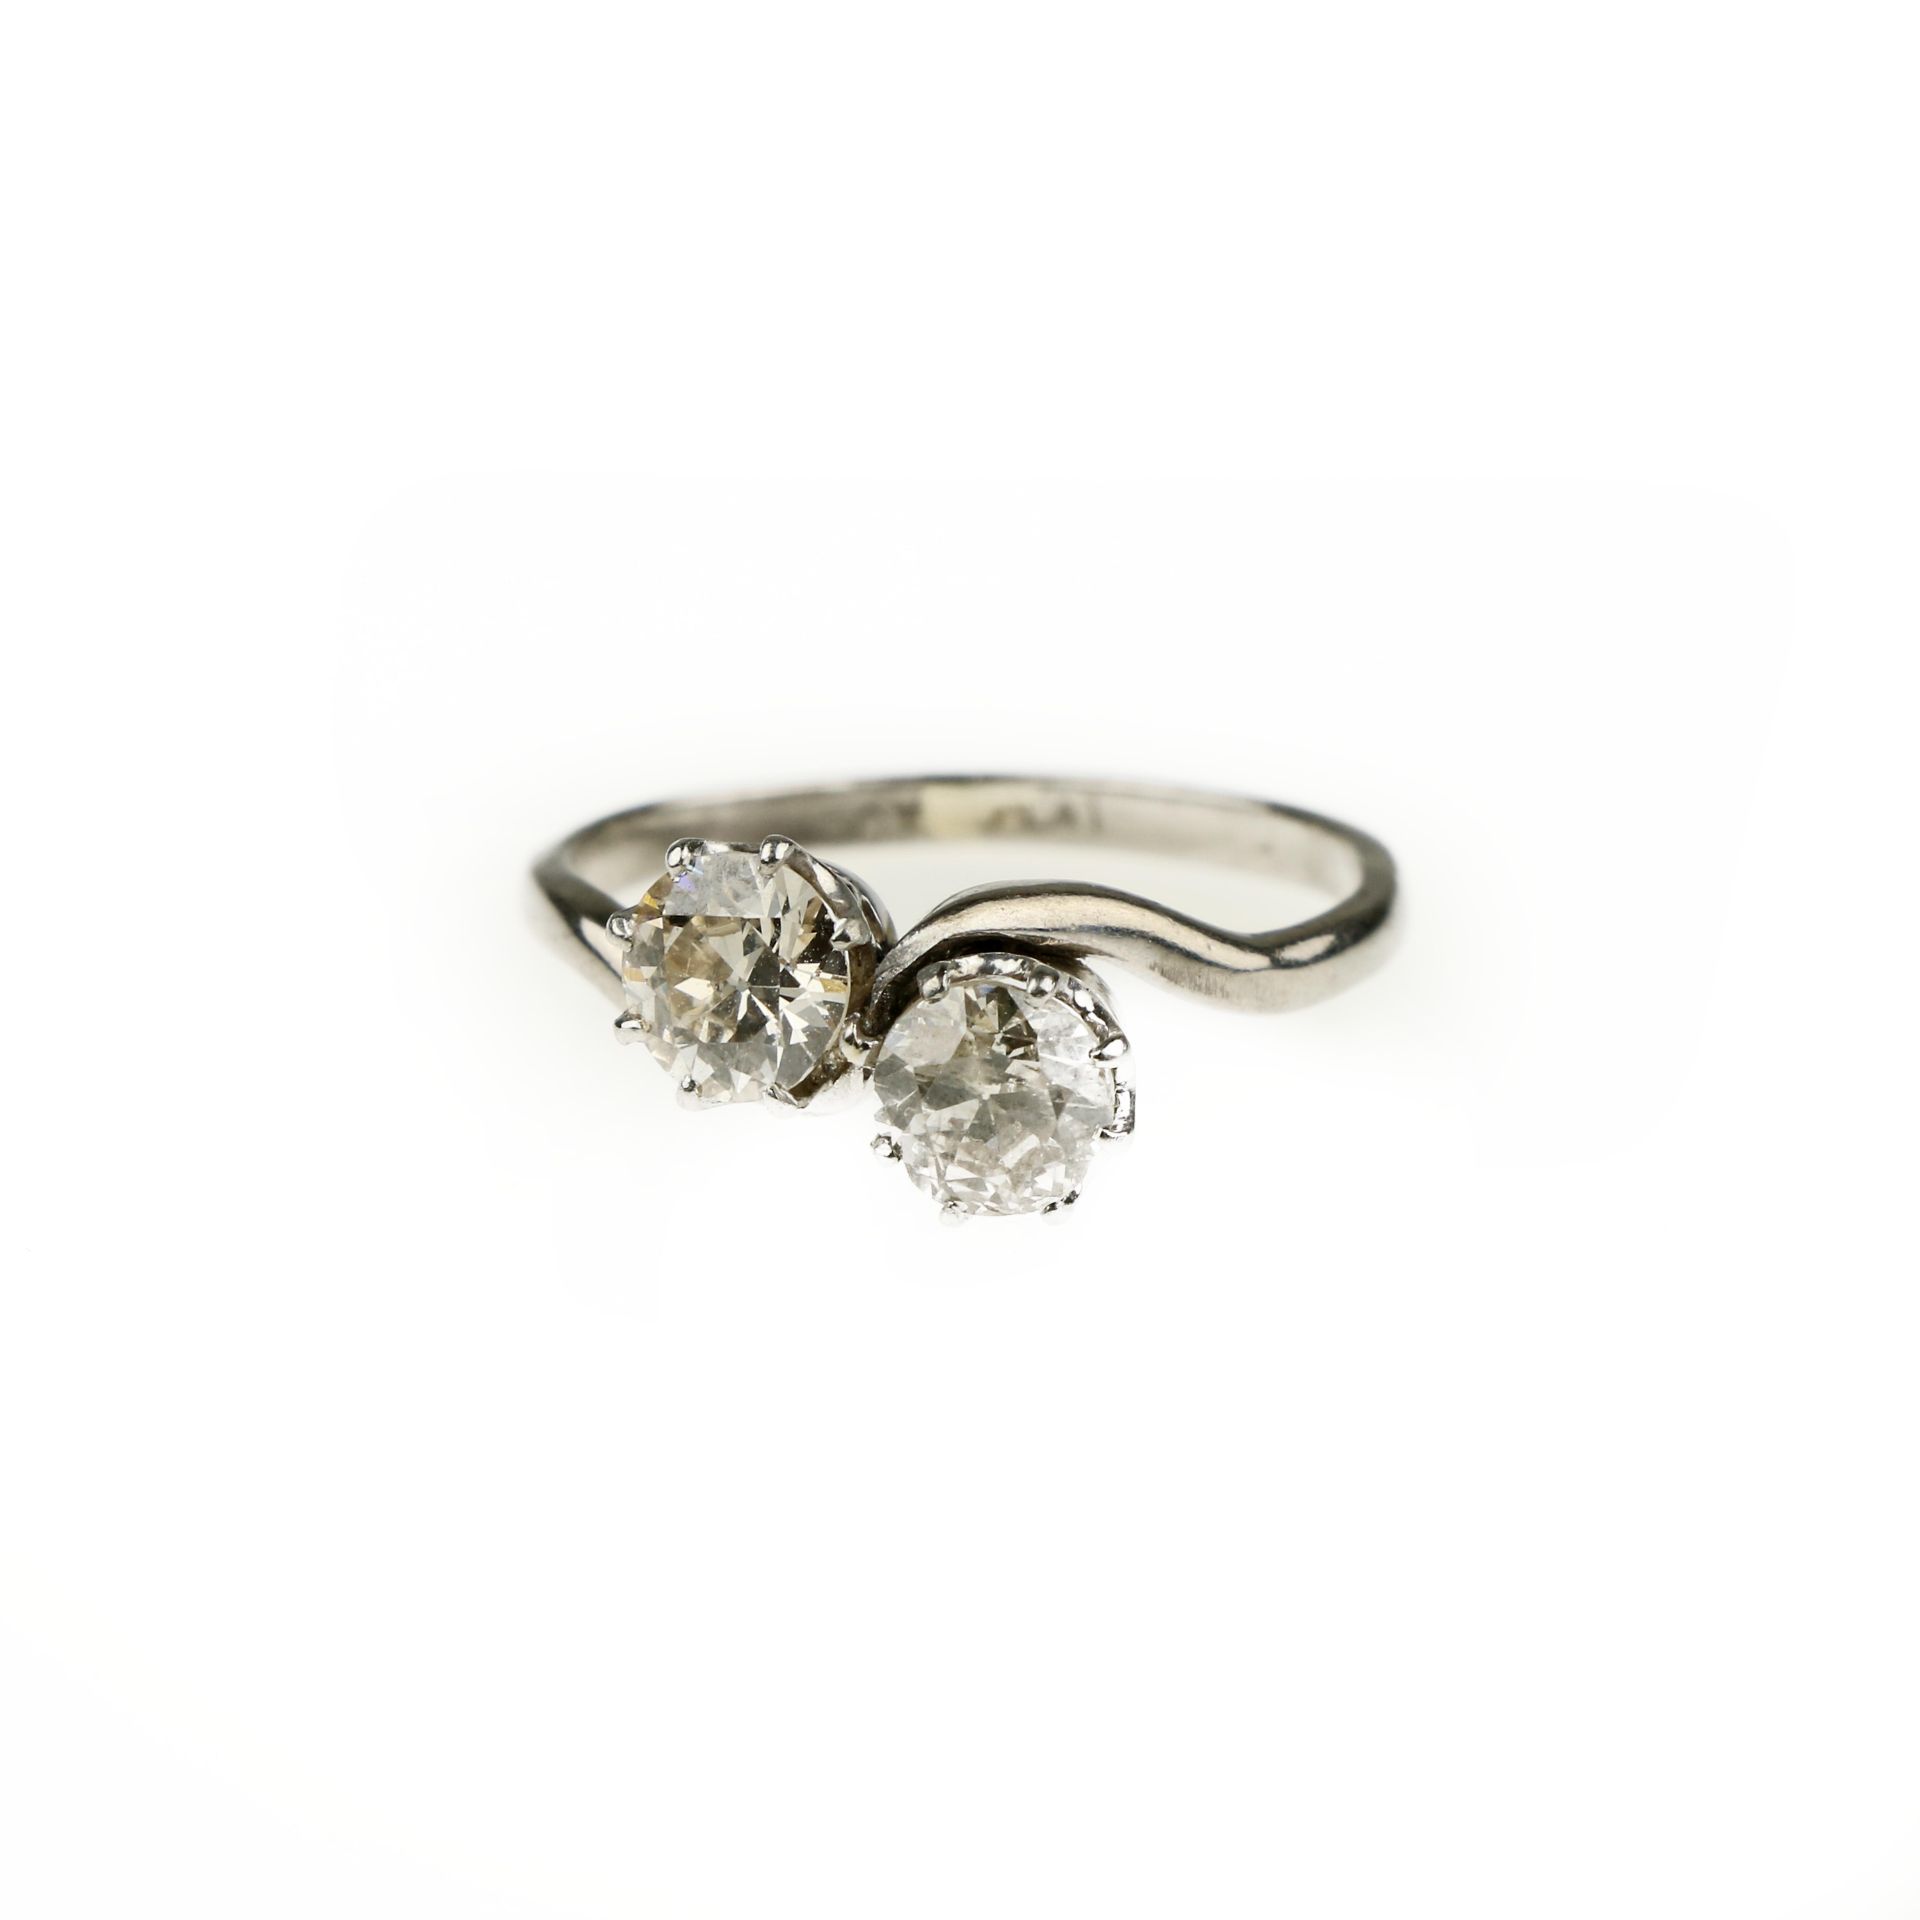 A Diamond two-stone twist ring